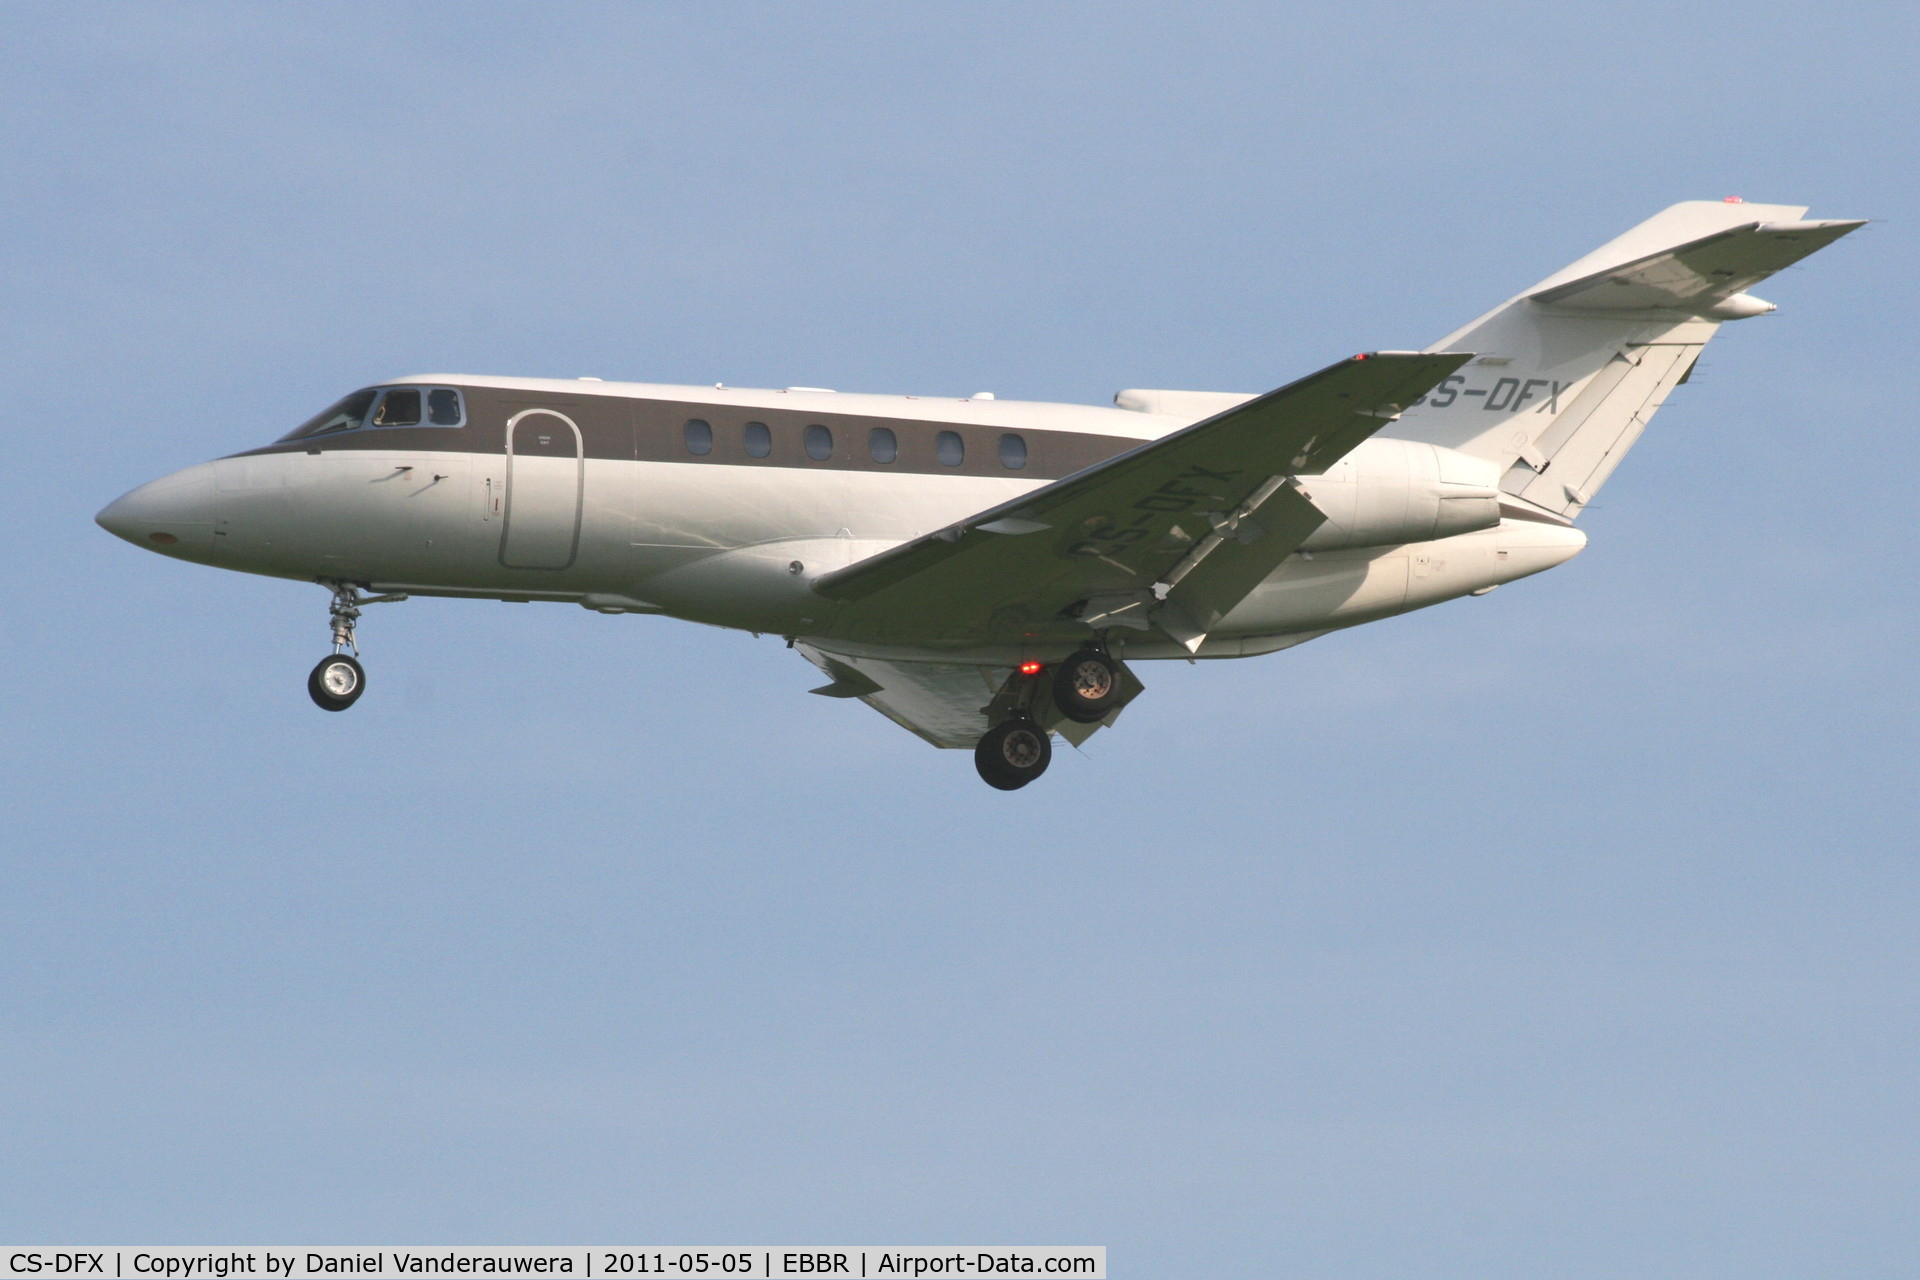 CS-DFX, 2004 Raytheon Hawker 800XP C/N 258656, Descending to RWY 25L